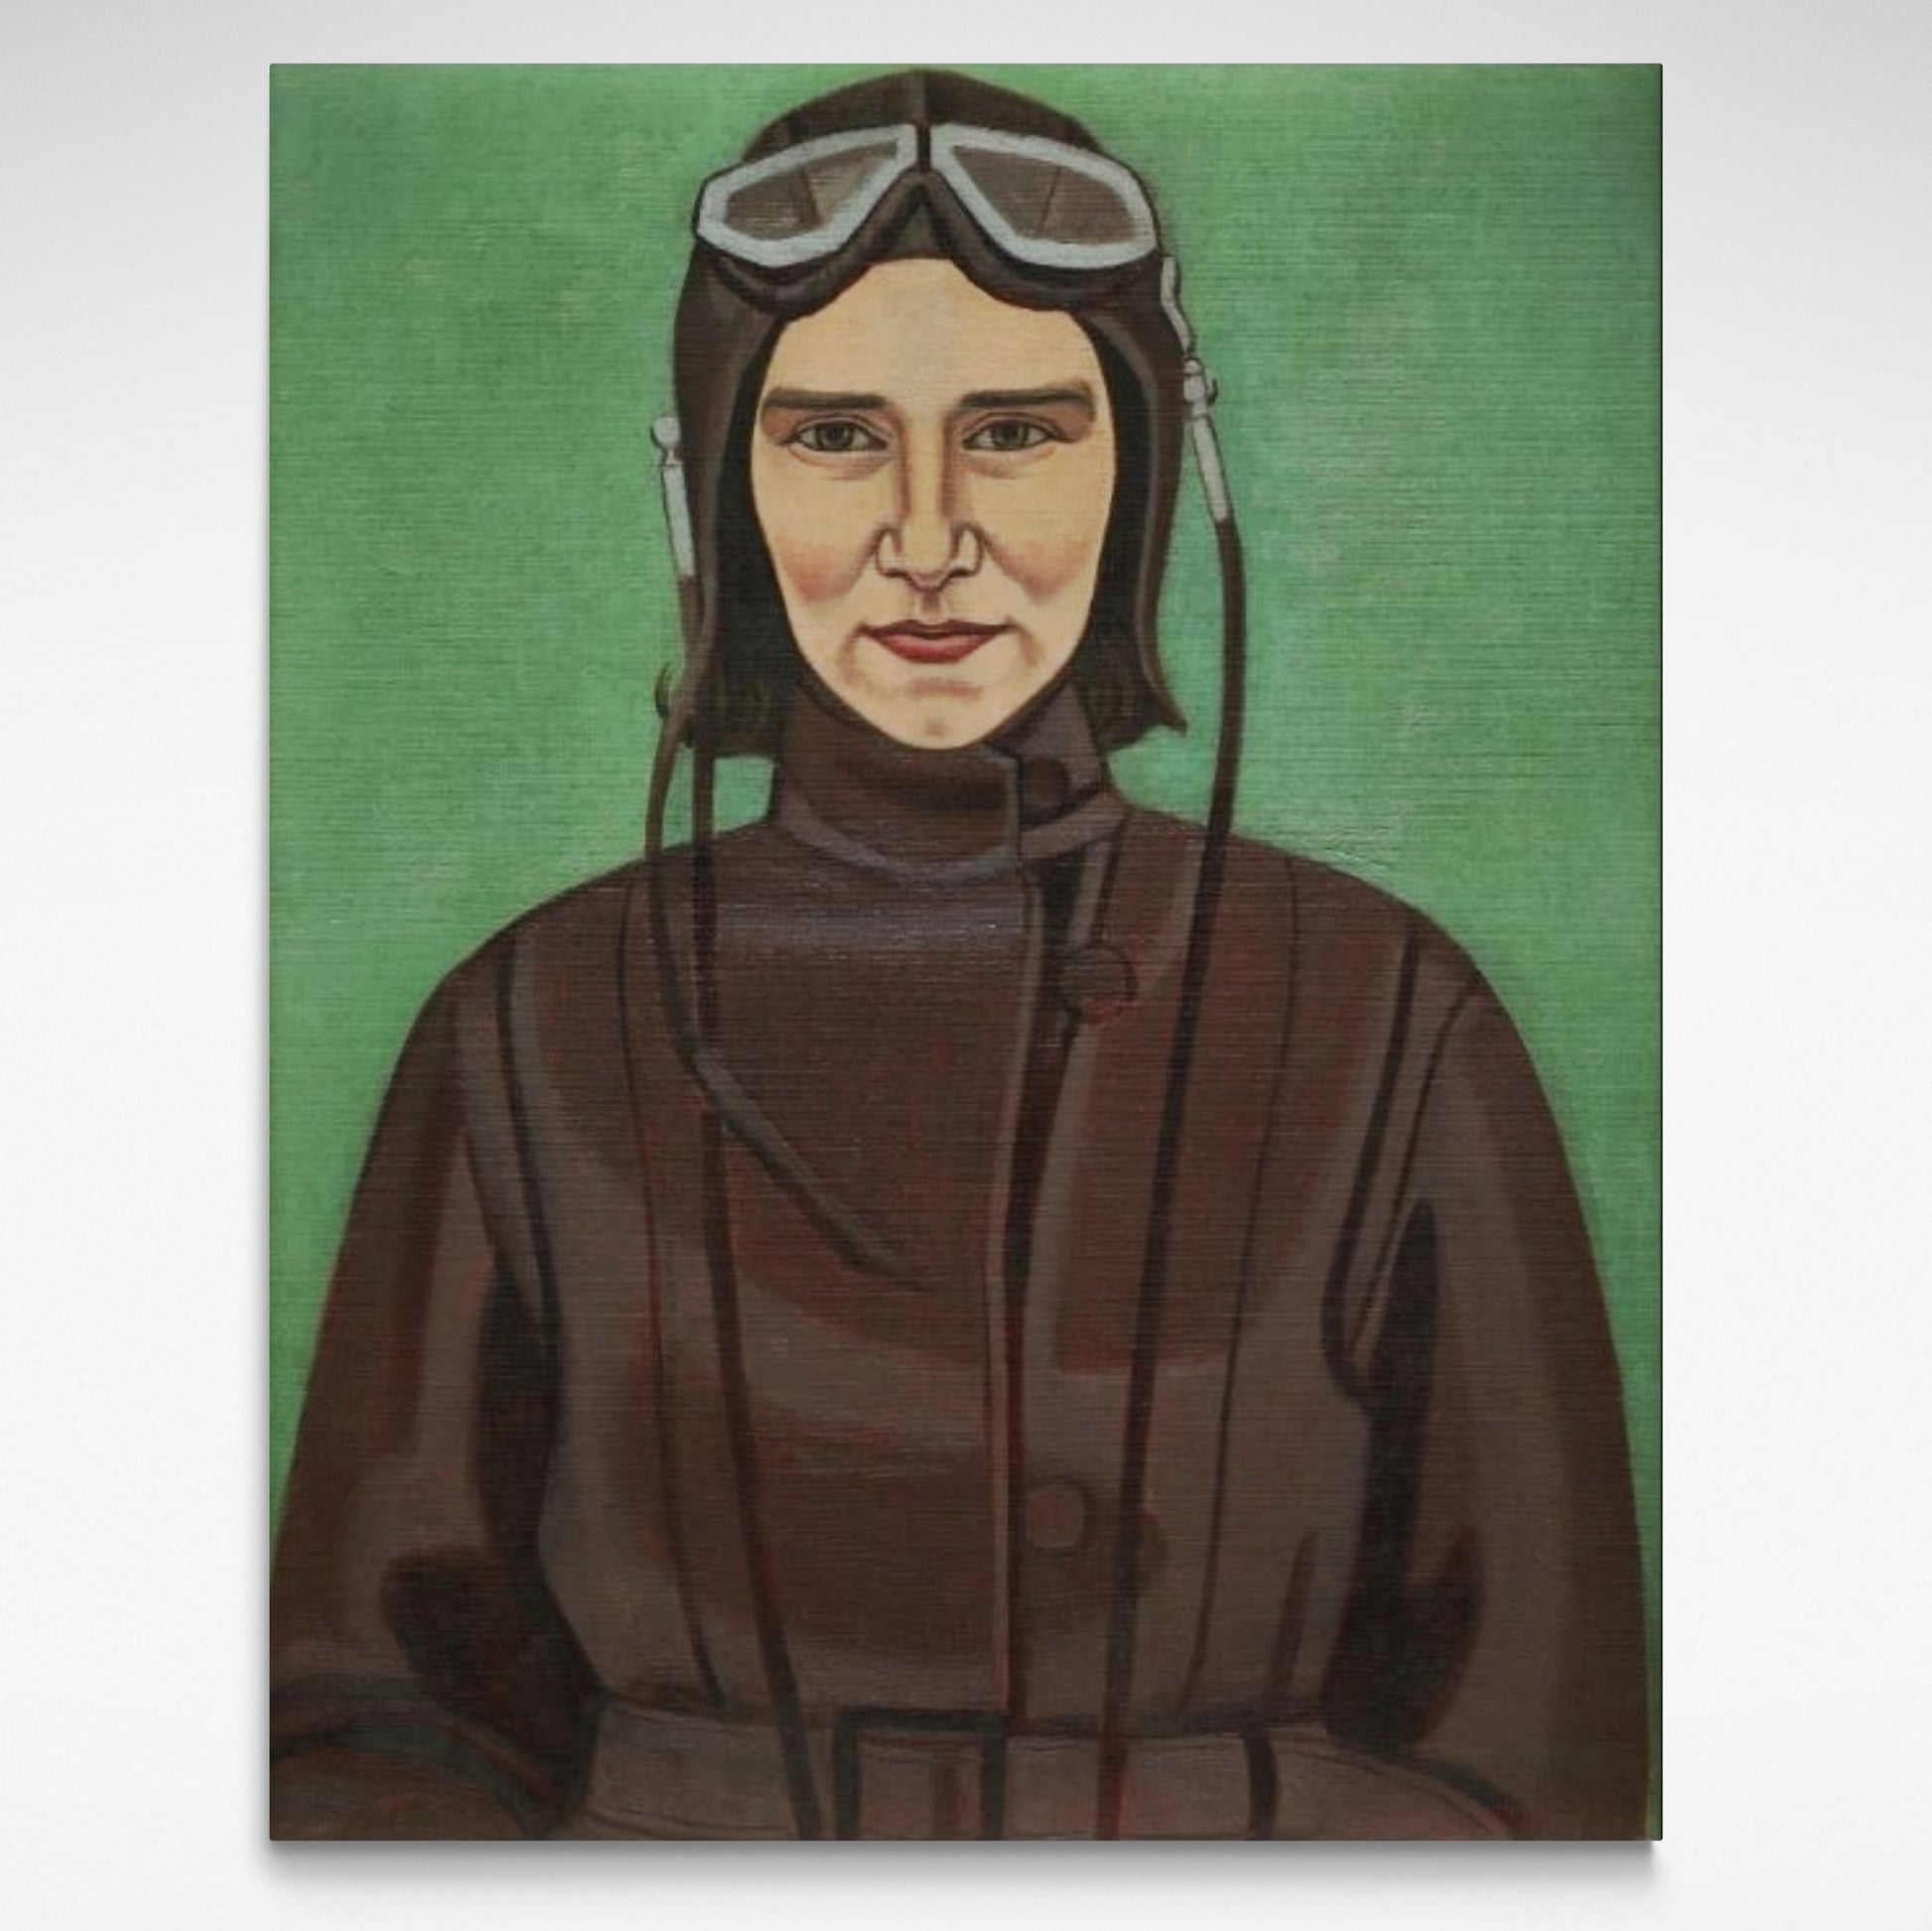 Portrait of an 1930s aviatrix